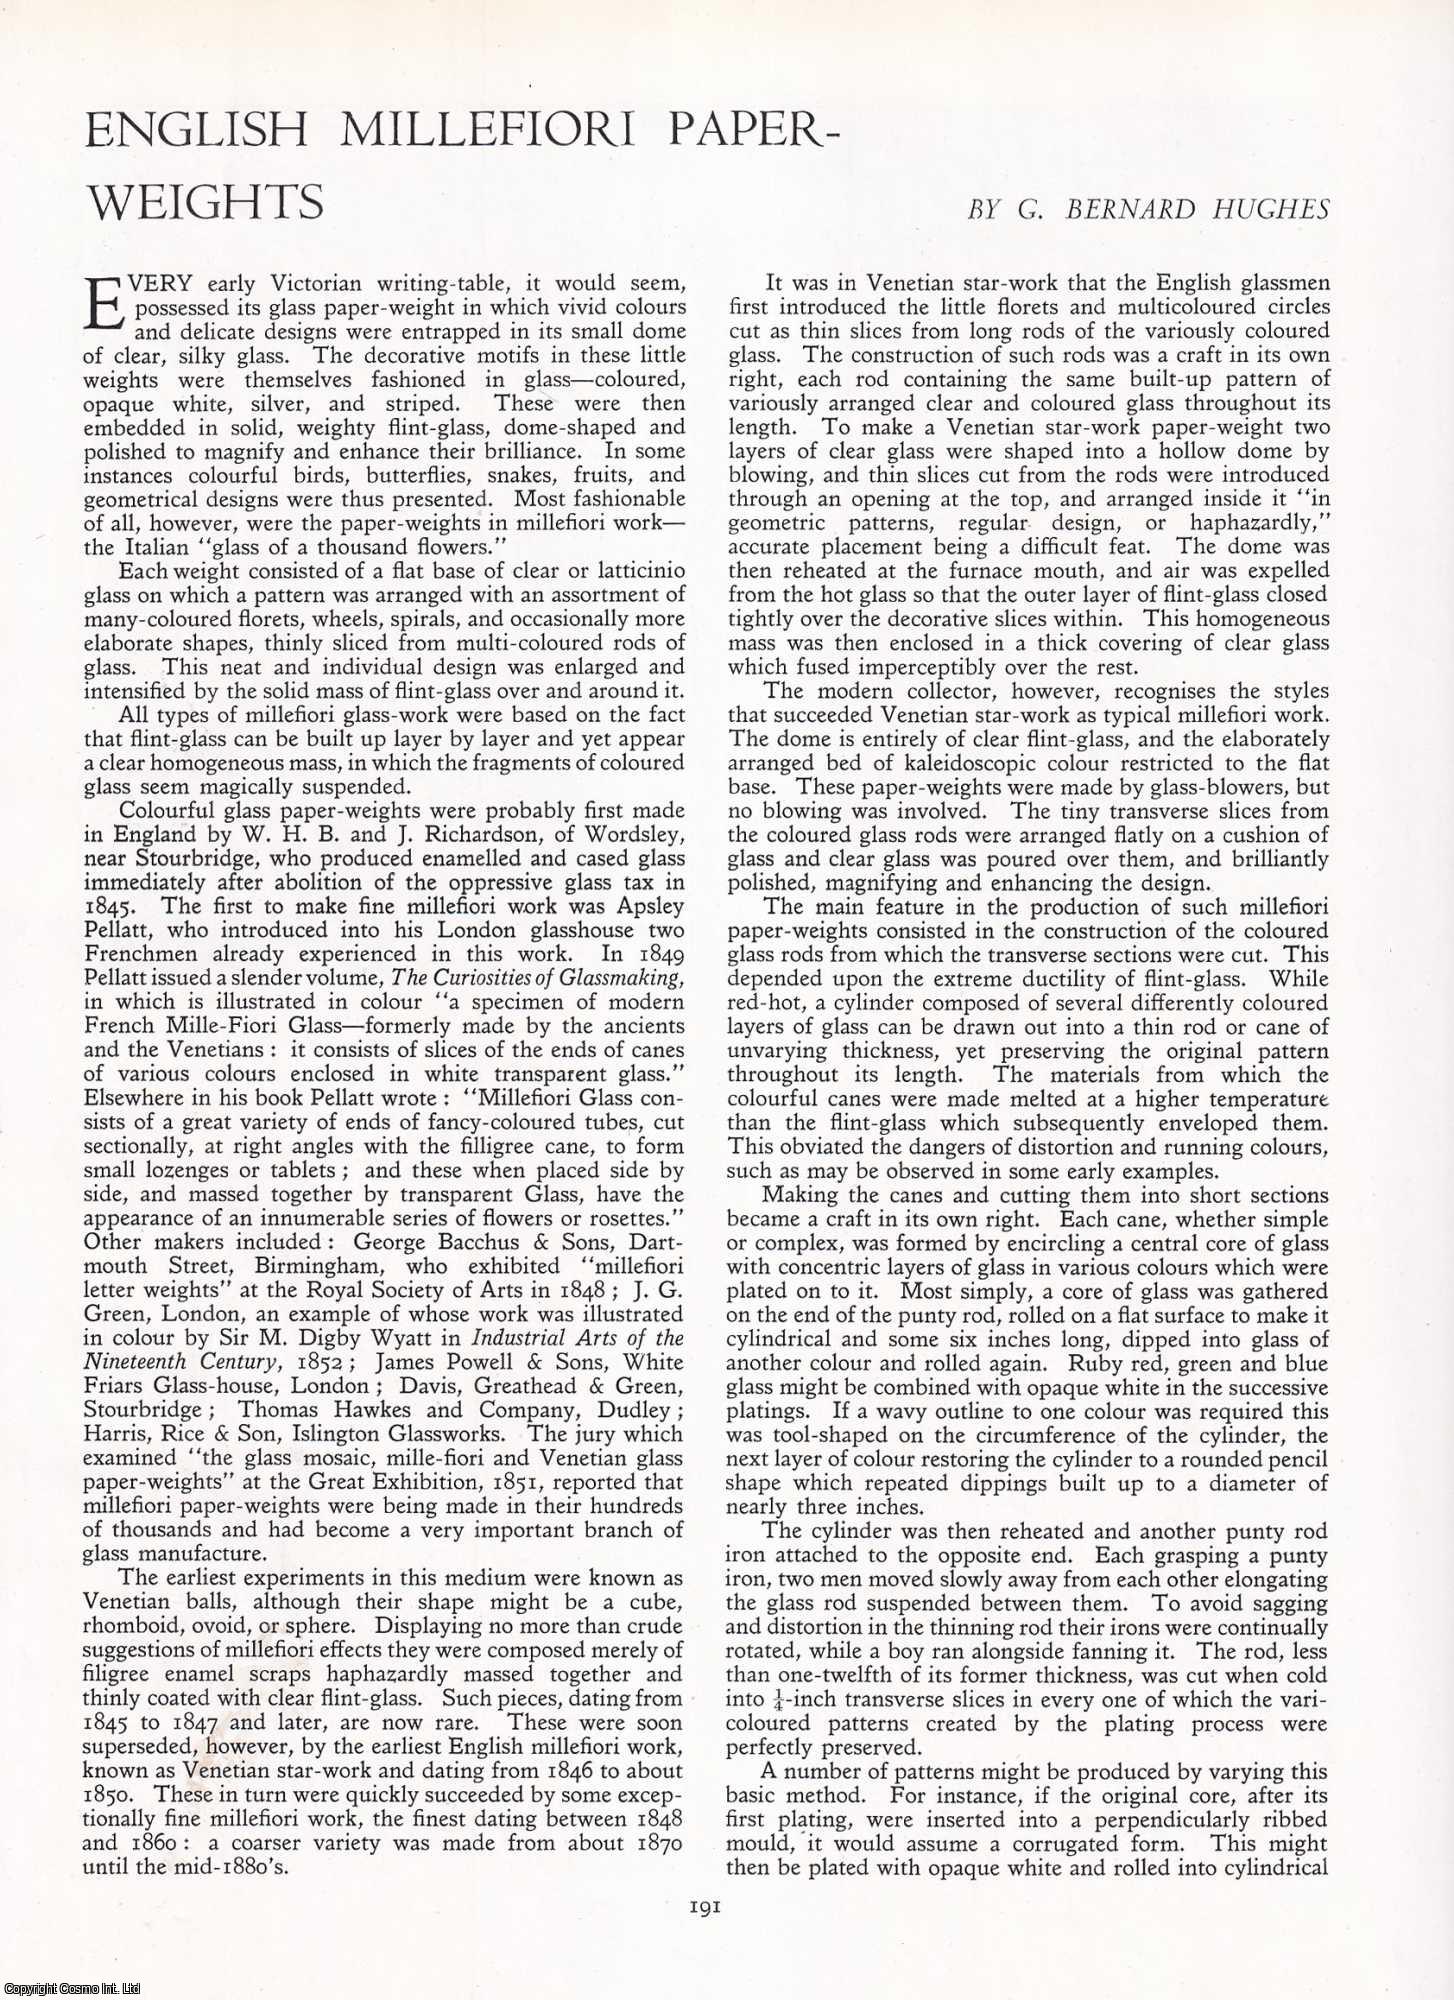 G. Bernard Hughes - English Millefiori Paper-Weights. An original article from Apollo, International Magazine of the Arts, 1952.